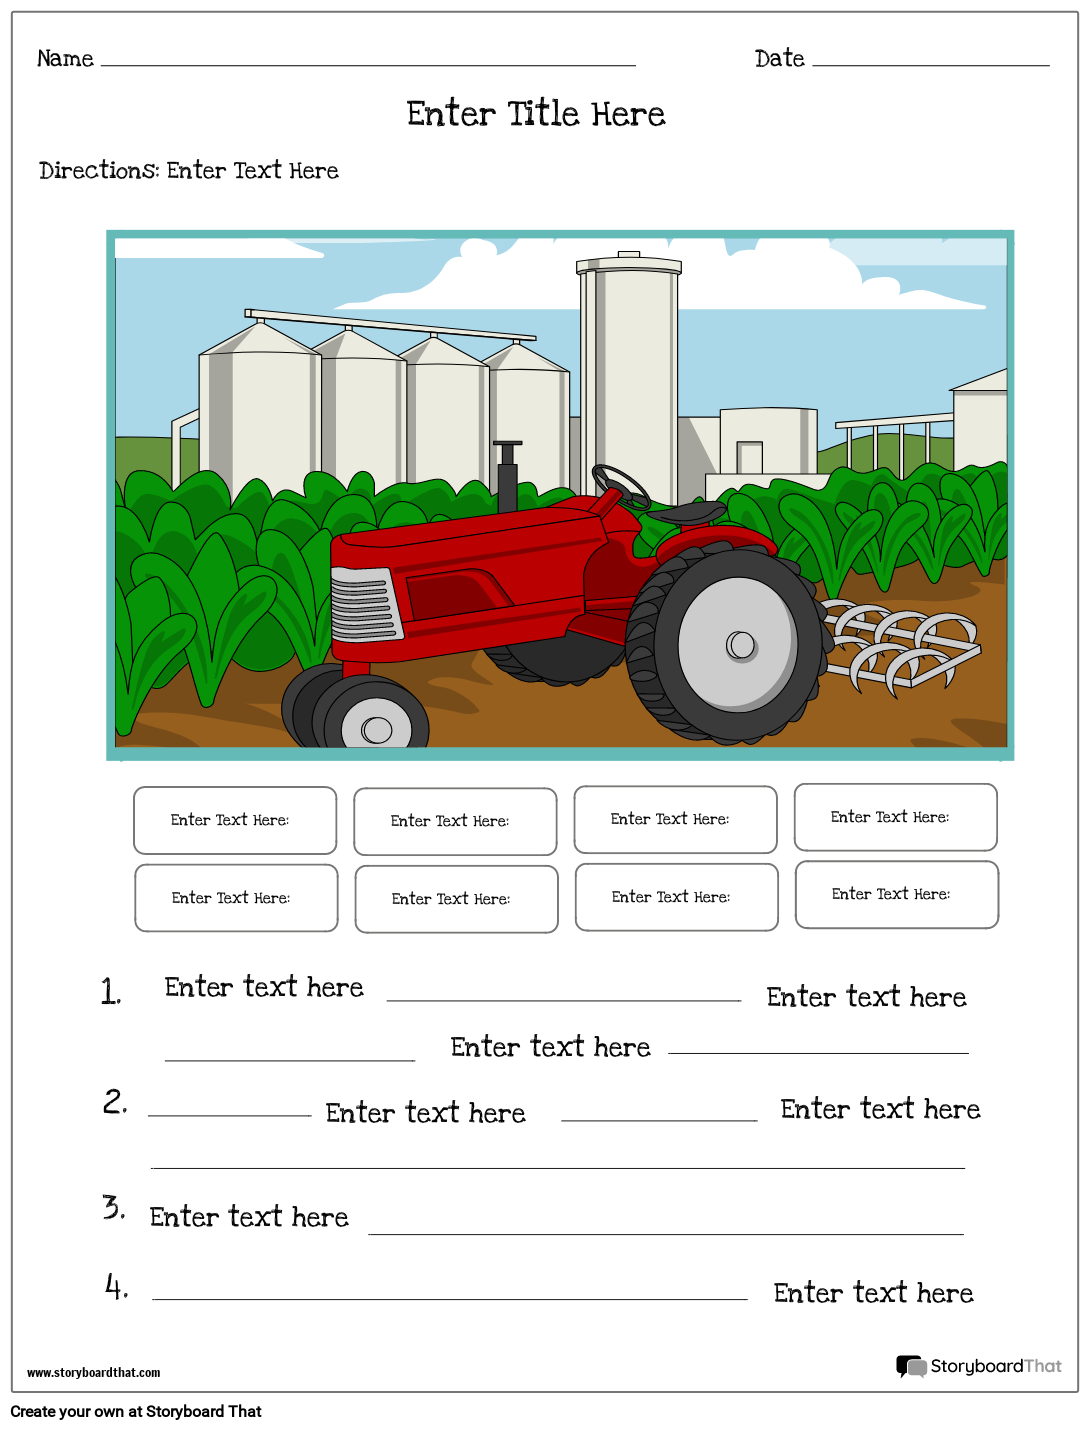 Farm Picture Based Long Composition Worksheet Design